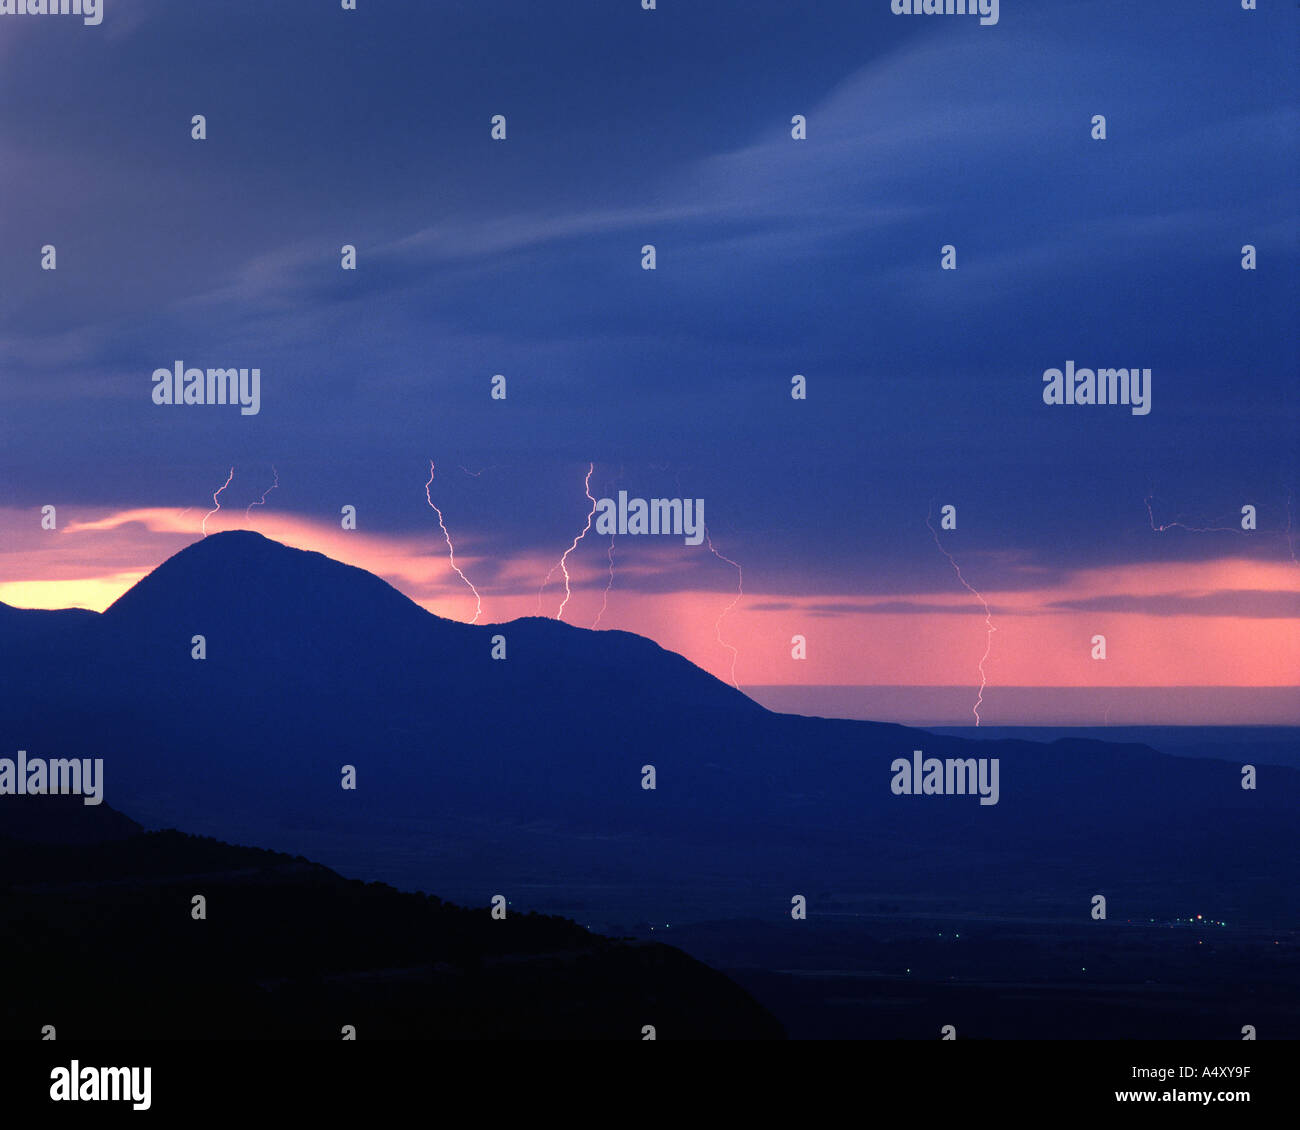 USA - COLORADO: Lightning Storm over Sleeping Ute Mountain Stock Photo